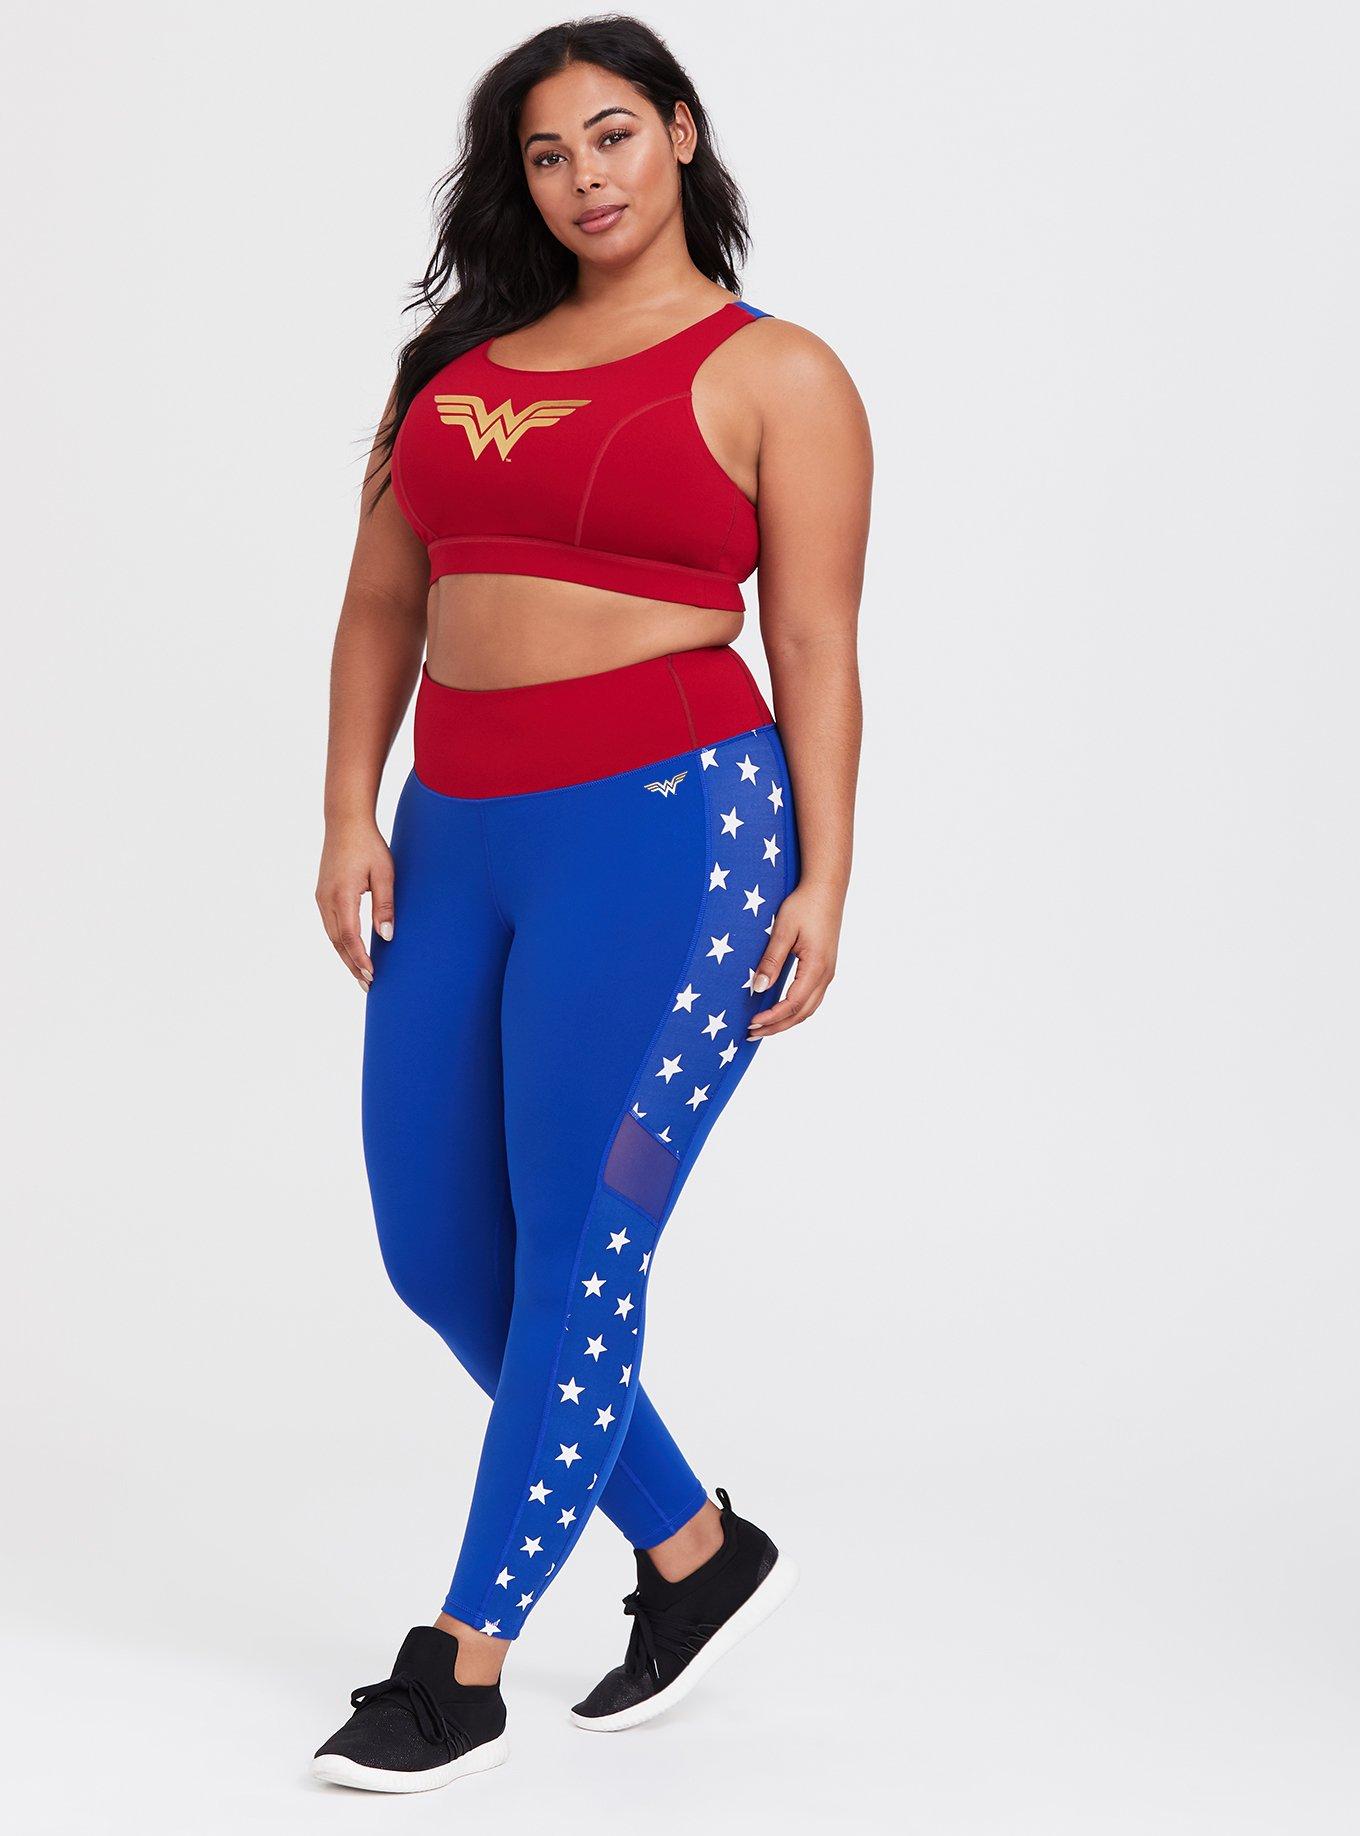 8631, Misses' Wonder Woman Knit Sports Bra, Top, and Leggings